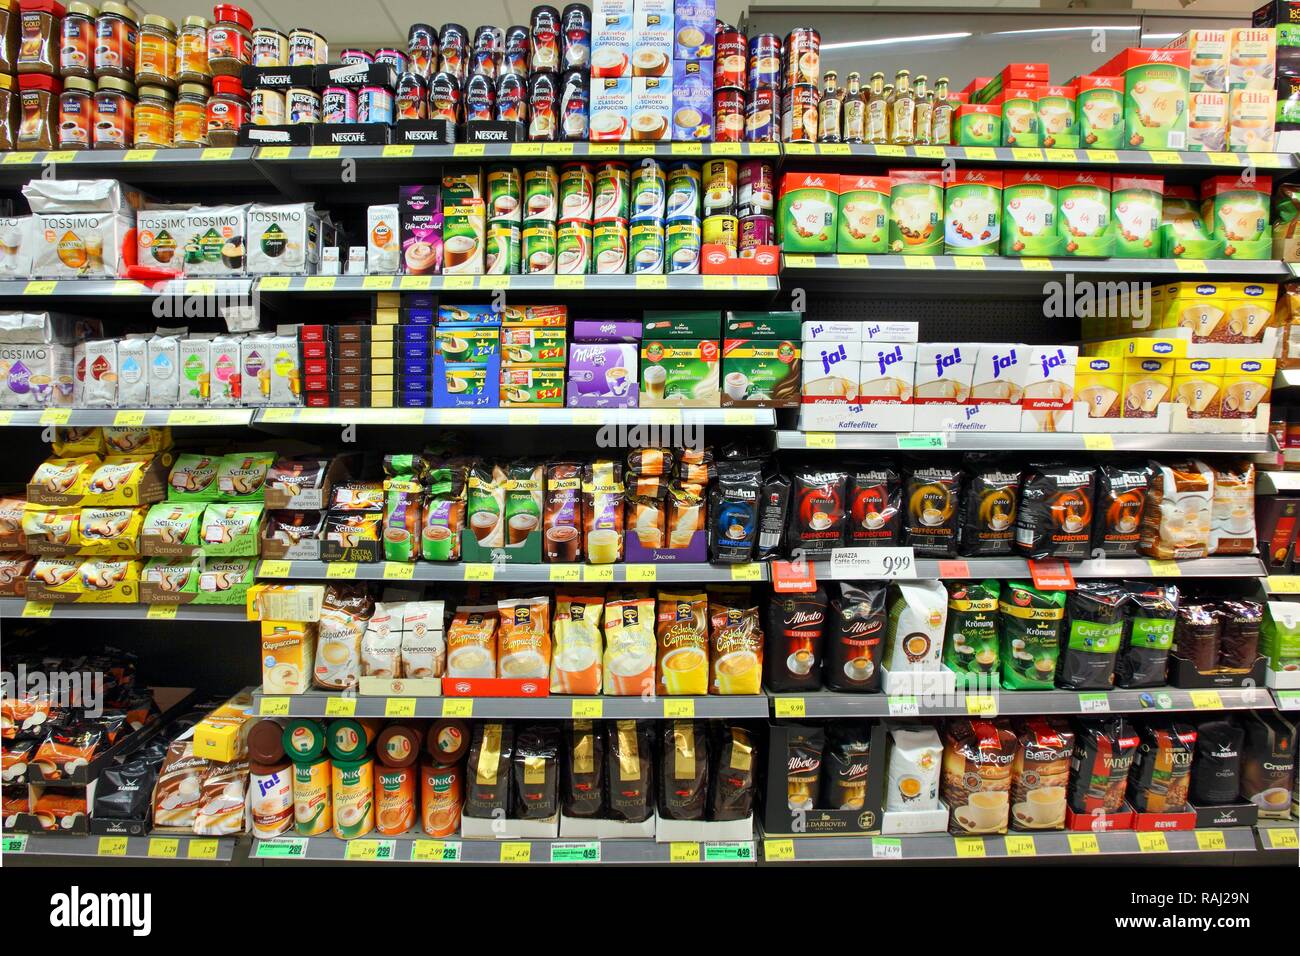 Estantes de supermercado frijol fotografías e imágenes de alta resolución -  Alamy